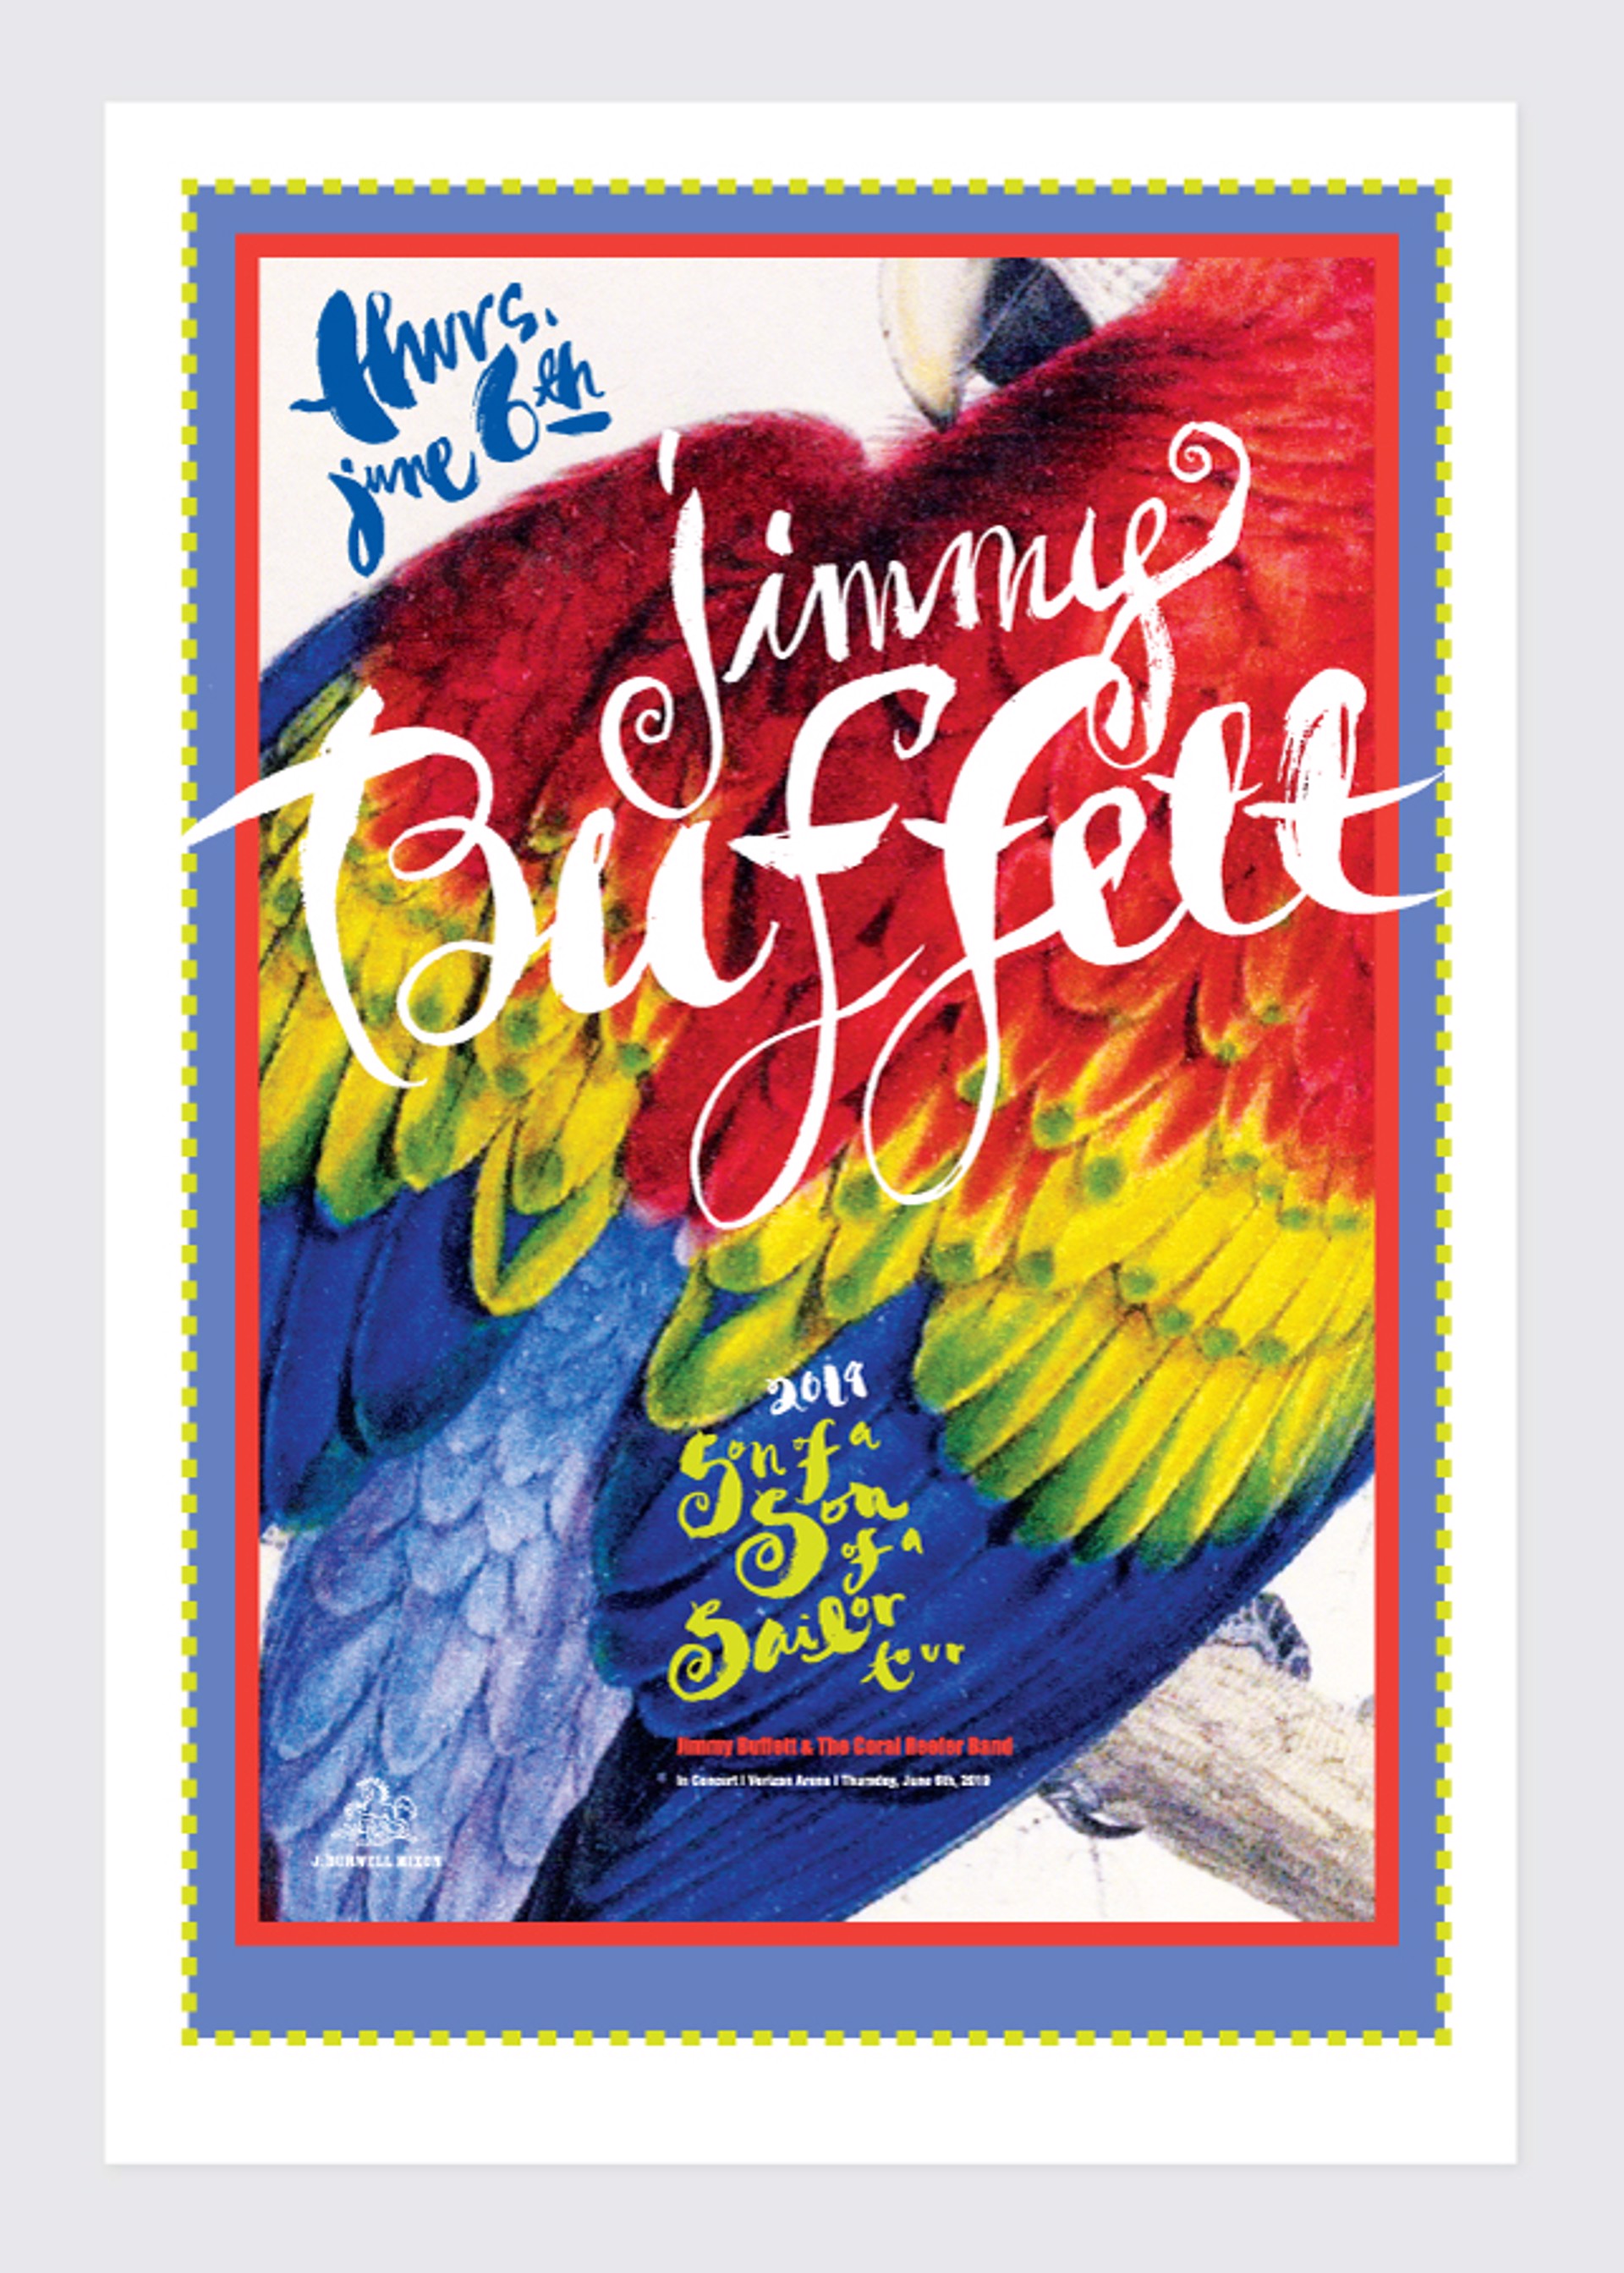 Jimmy Buffett Concert Poster by Jamie Burwell Mixon